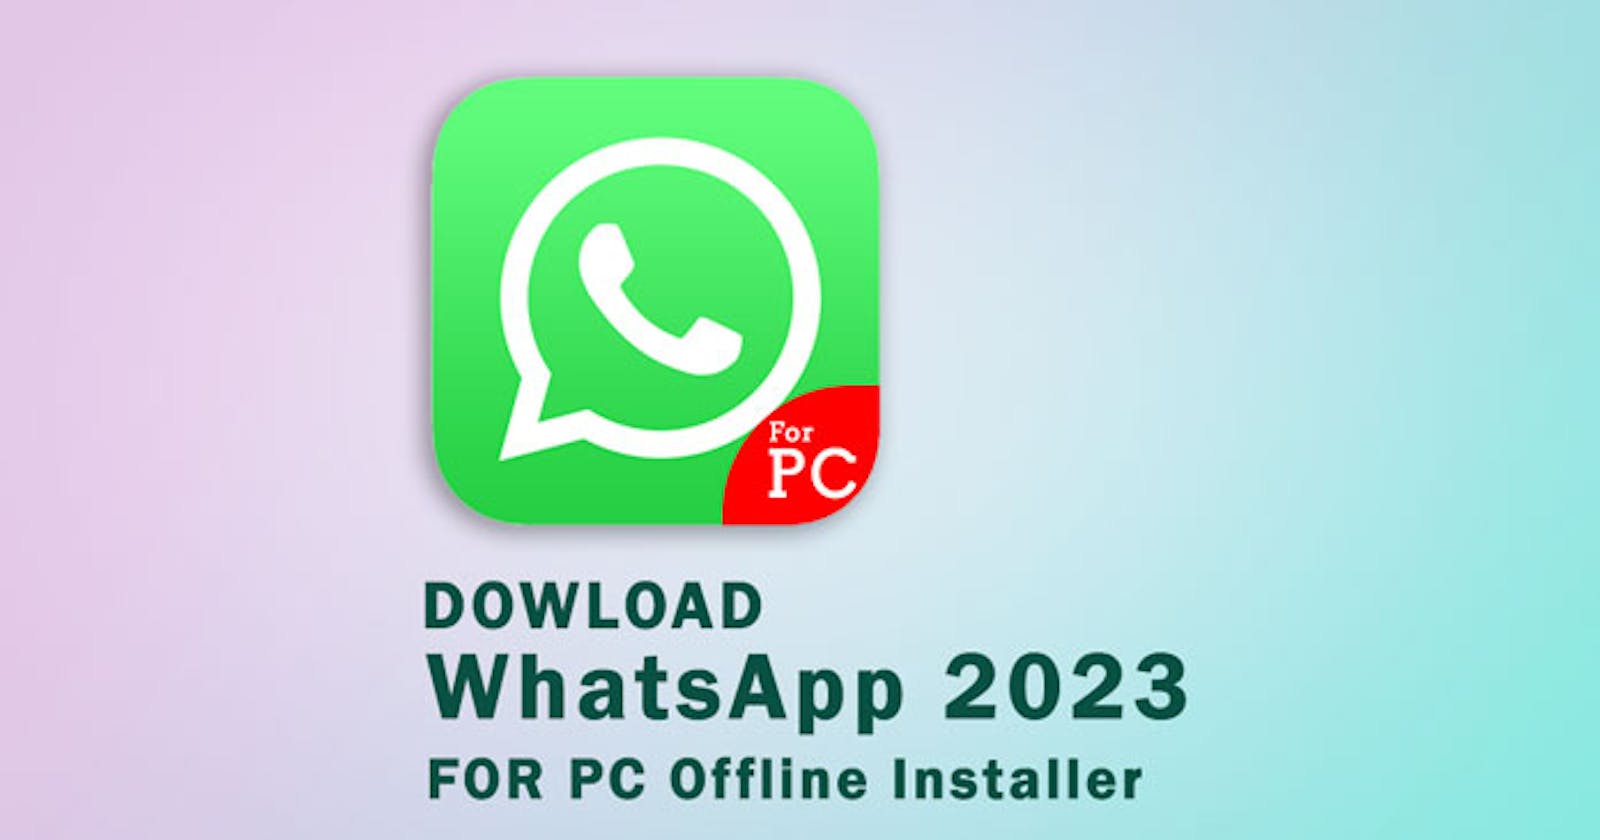 Download WhatsApp 2023 for PC Offline Installer